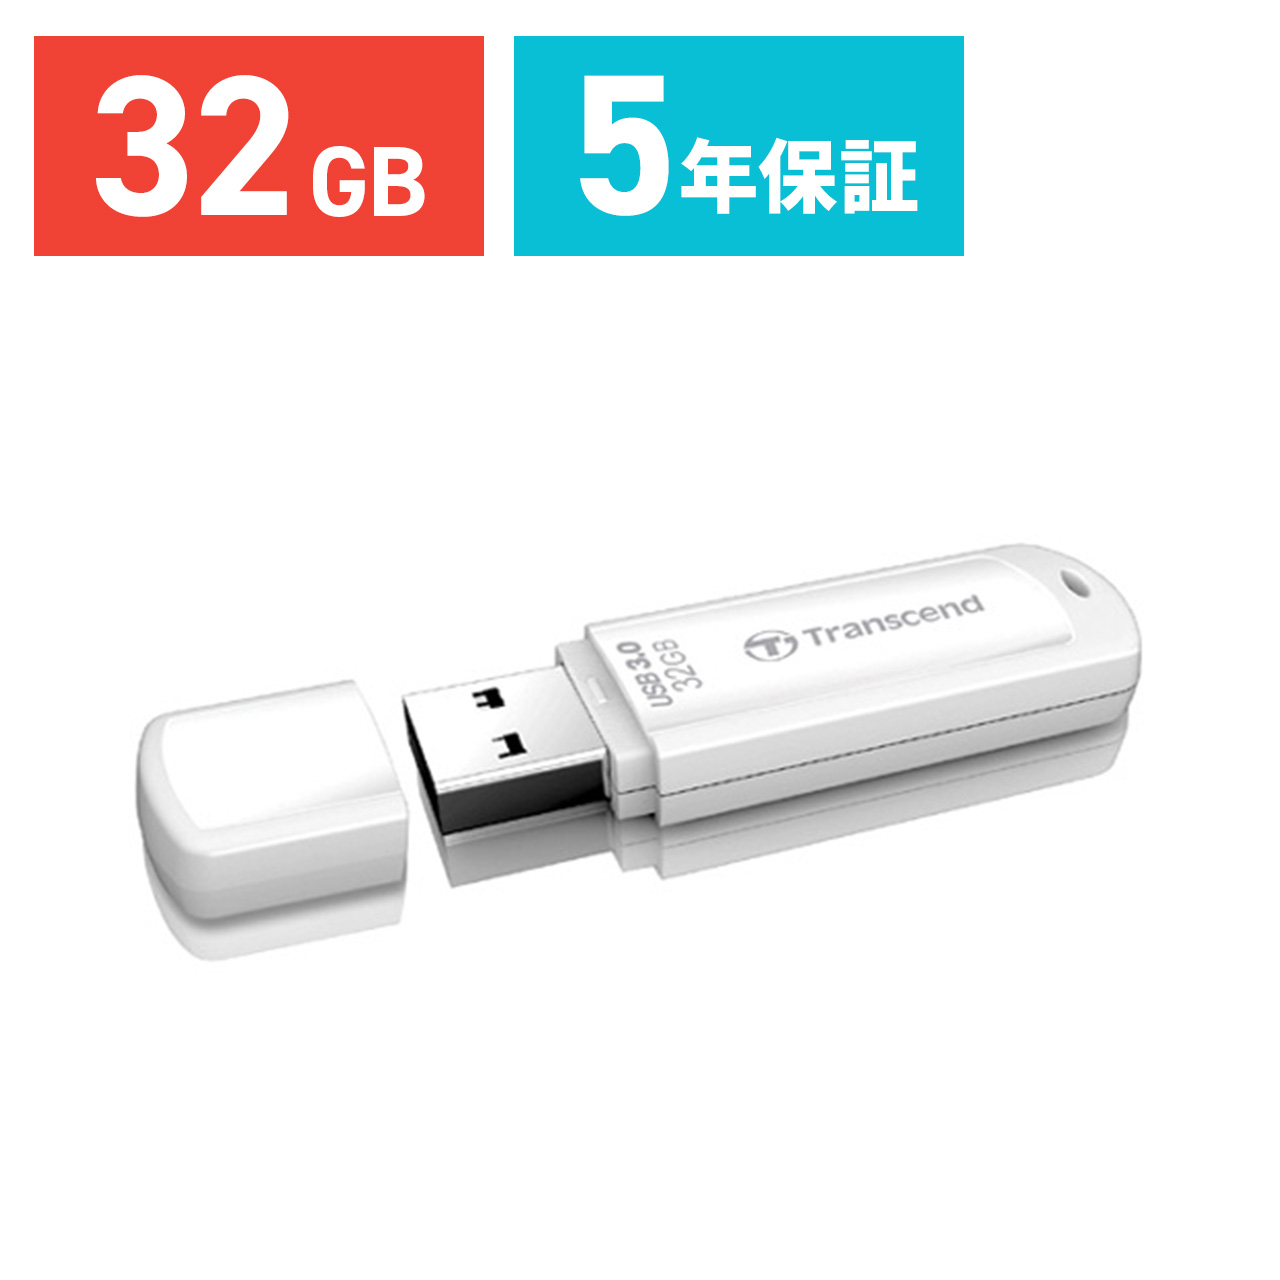 TS32GJF730 ネコポス専用 送料無料対象品 Transcend USBメモリ 32GB USB3.0 JetFlash730 光沢ホワイトボディ おしゃれ 高速 受注生産品 信託 卒業 入学 USBメモリー 大容量